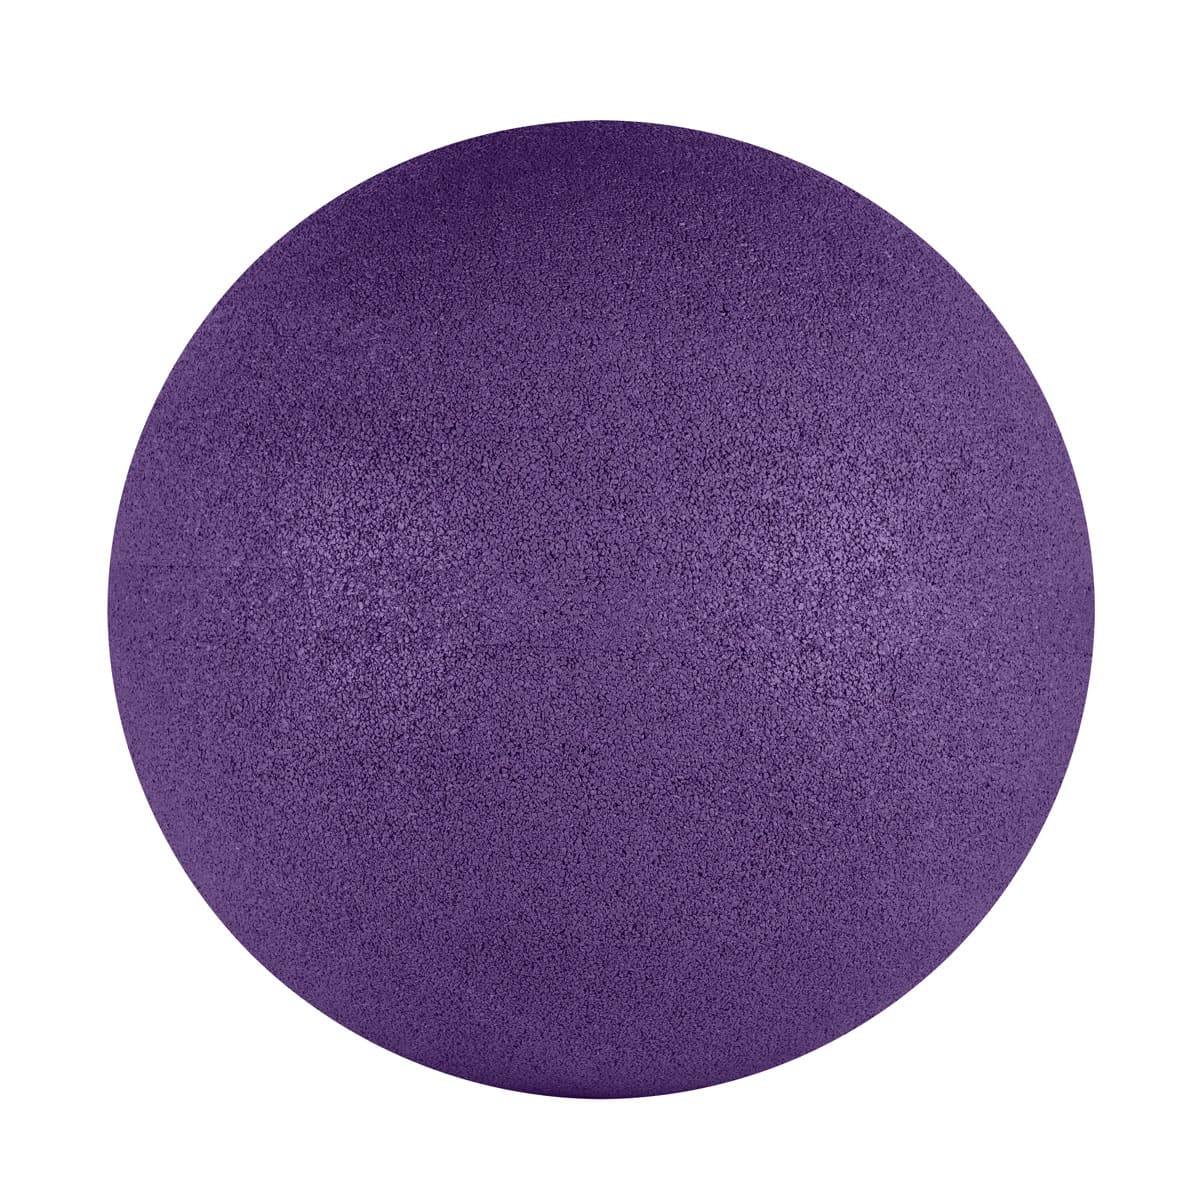 3d-sphere-full-size-aquaseal-resurfacing--purple_0d84e0c2-055a-48c5-ae34-f84b2aa4e017_1200x